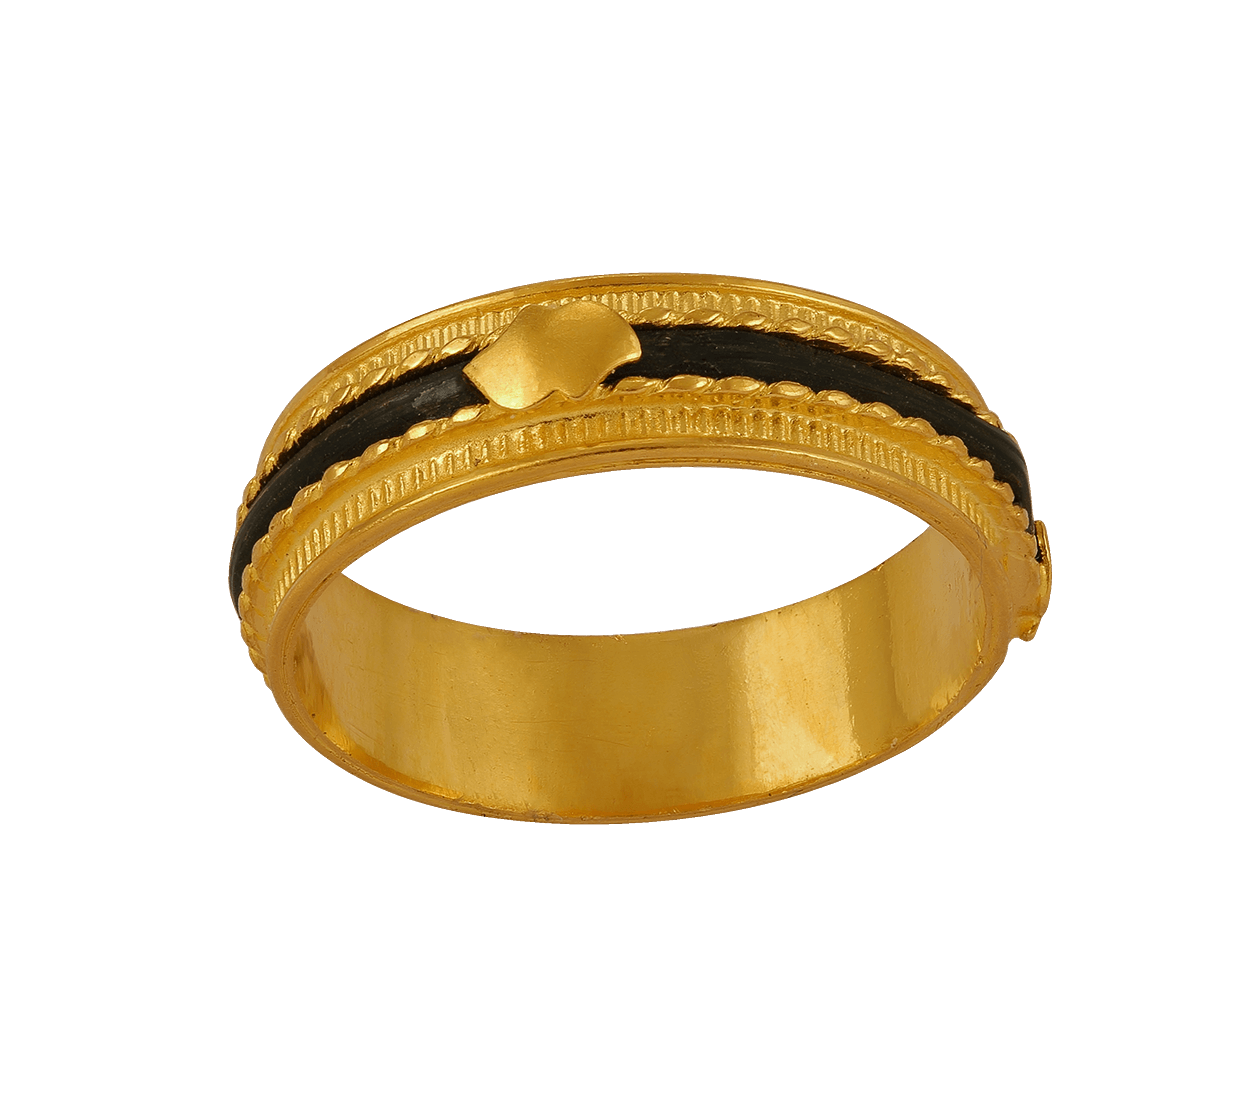 gold rings  gold rings online  gold rings for women  rings in gold  gold  fancy ring  gold ring for women  gold elephant ha